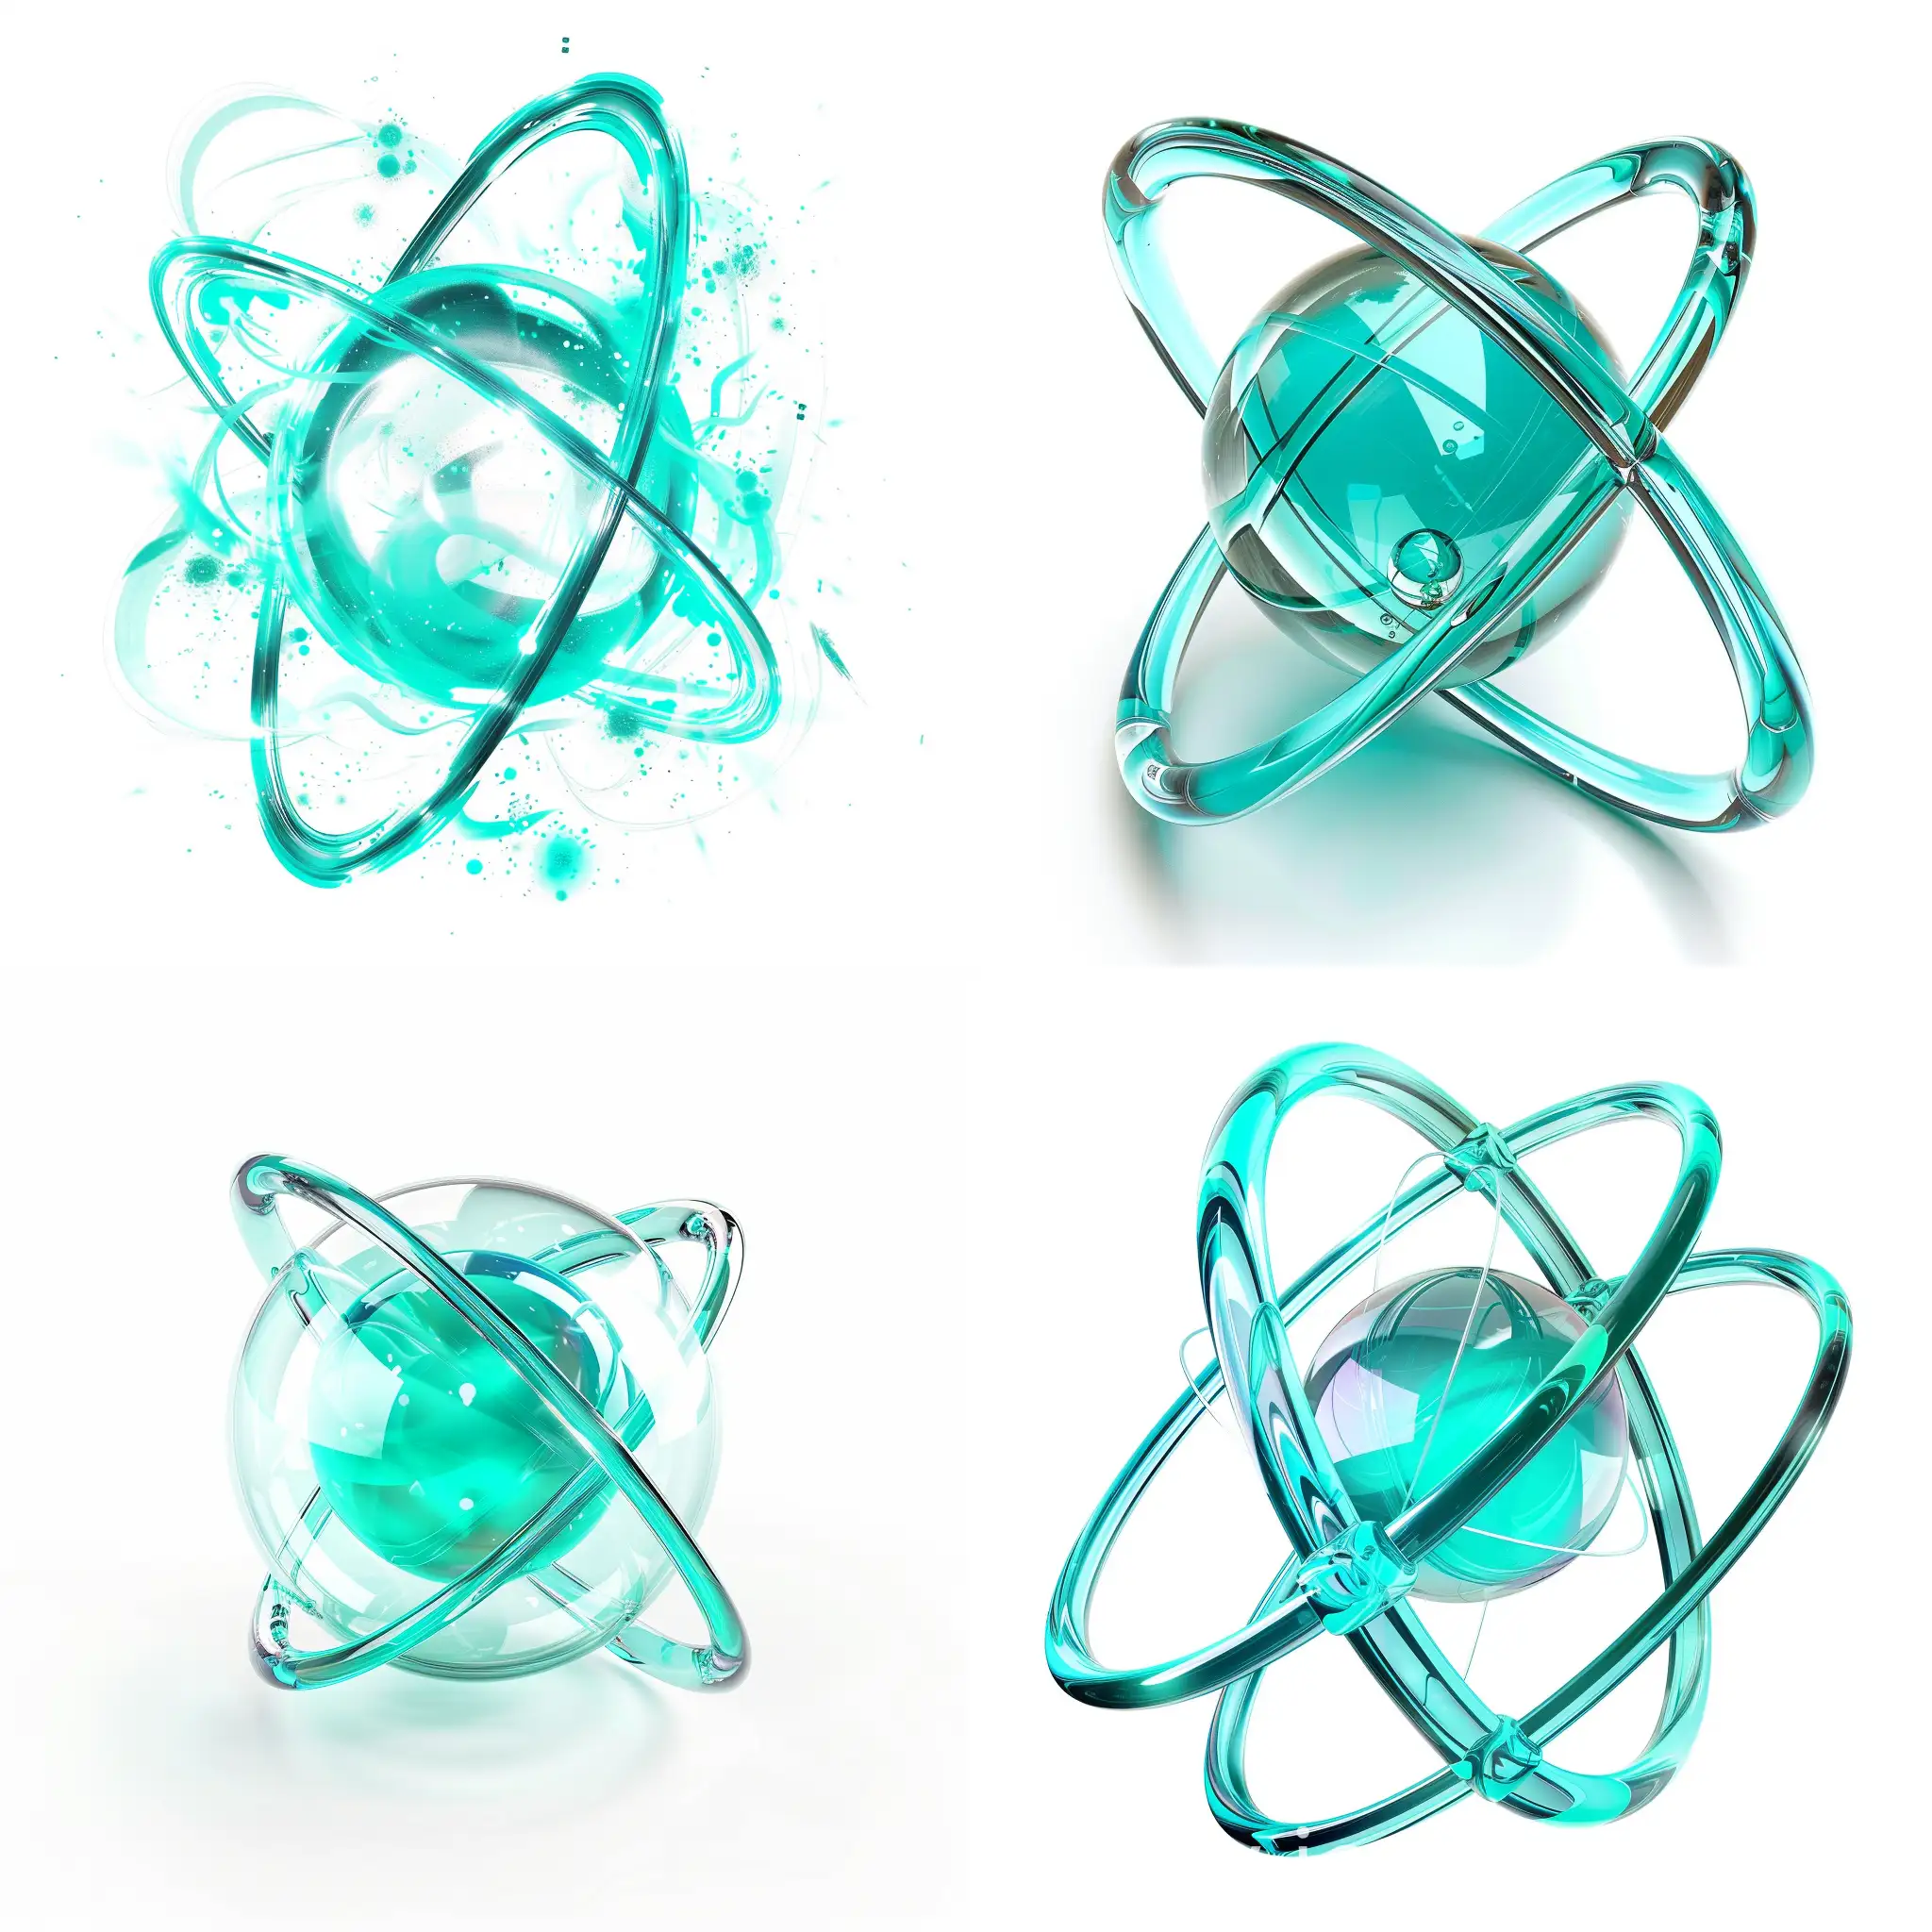 Vibrant-Turquoise-Atom-Orbiting-in-Bold-Glossy-Glass-Shiny-Illustration-on-White-Background